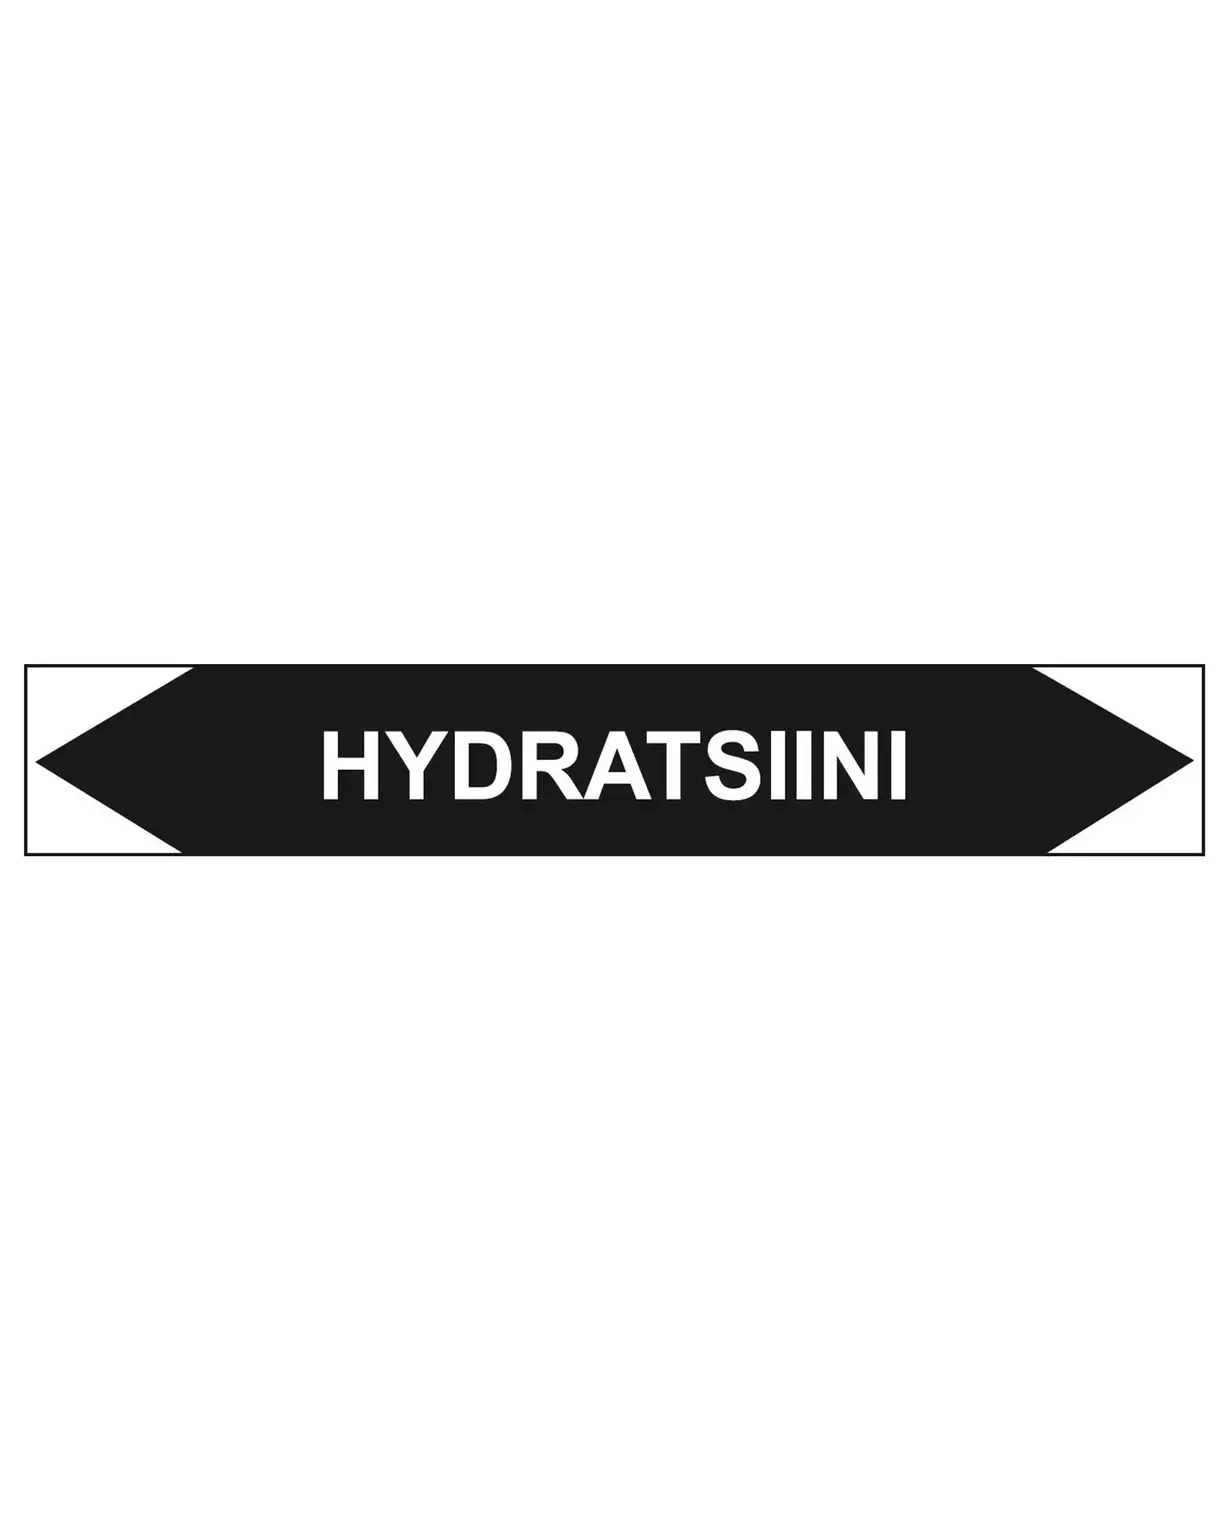 Hydratsiini, 160x25 mm